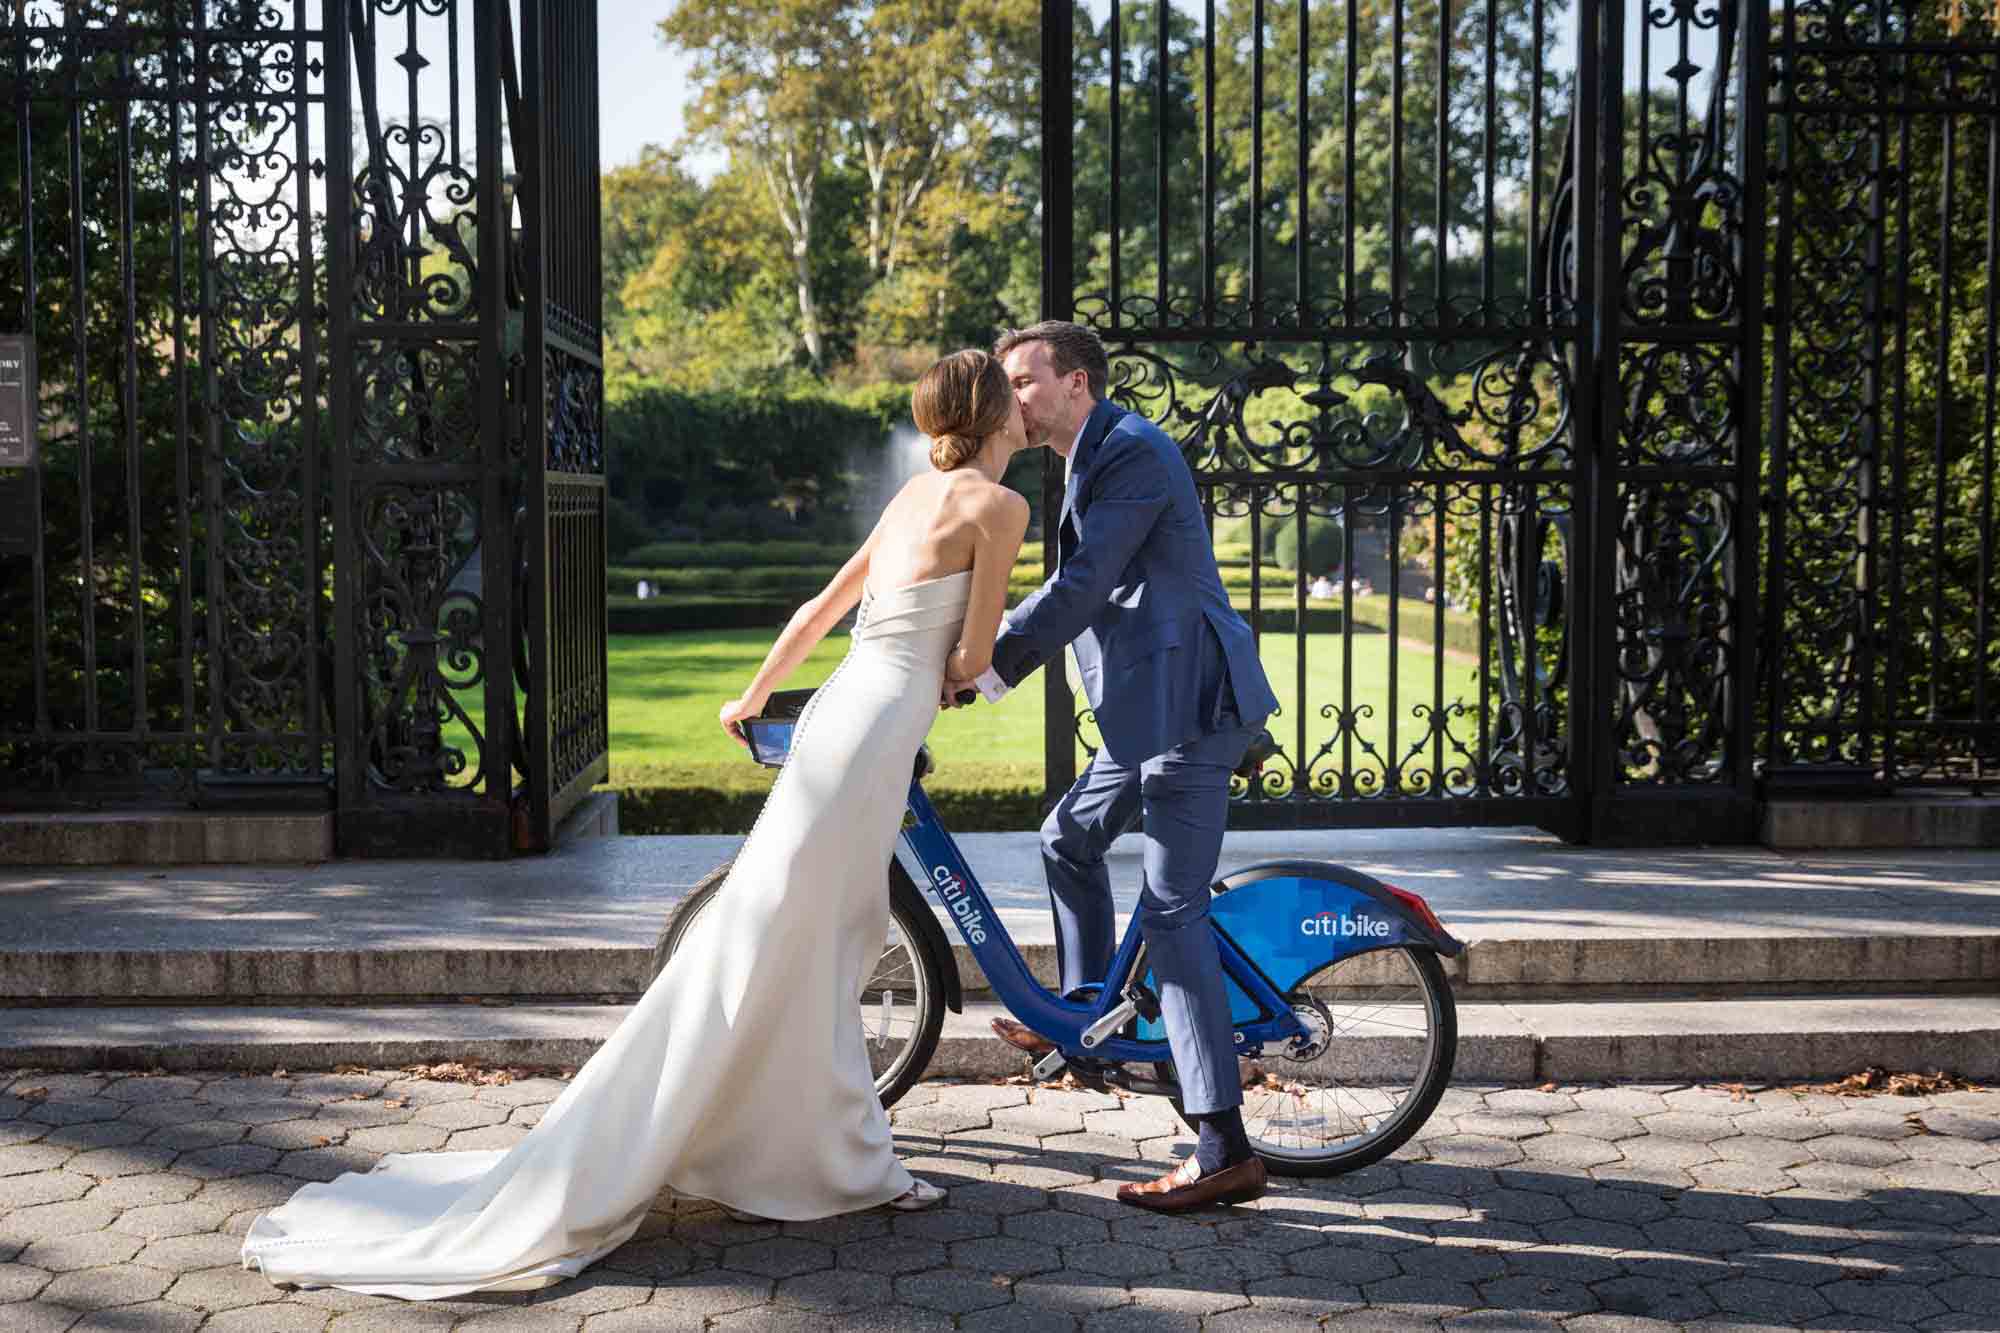 Conservatory Garden wedding photos of bride kissing groom on back of Citi Bike